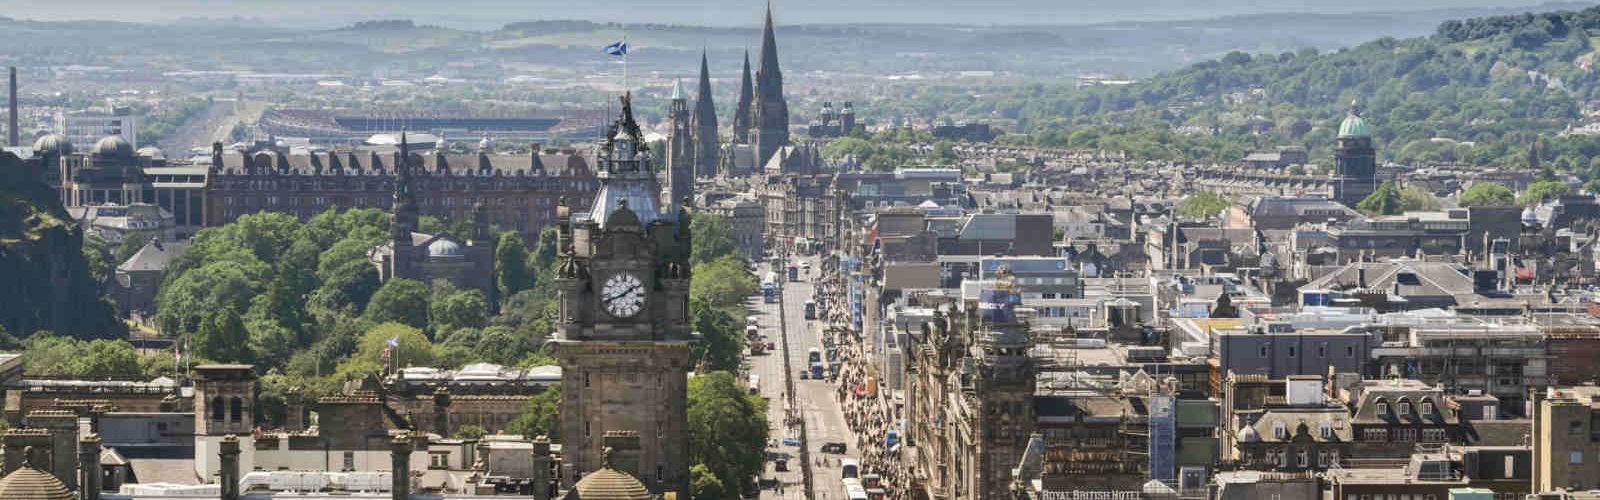 Panoramic view of Princes Street in Edinburgh